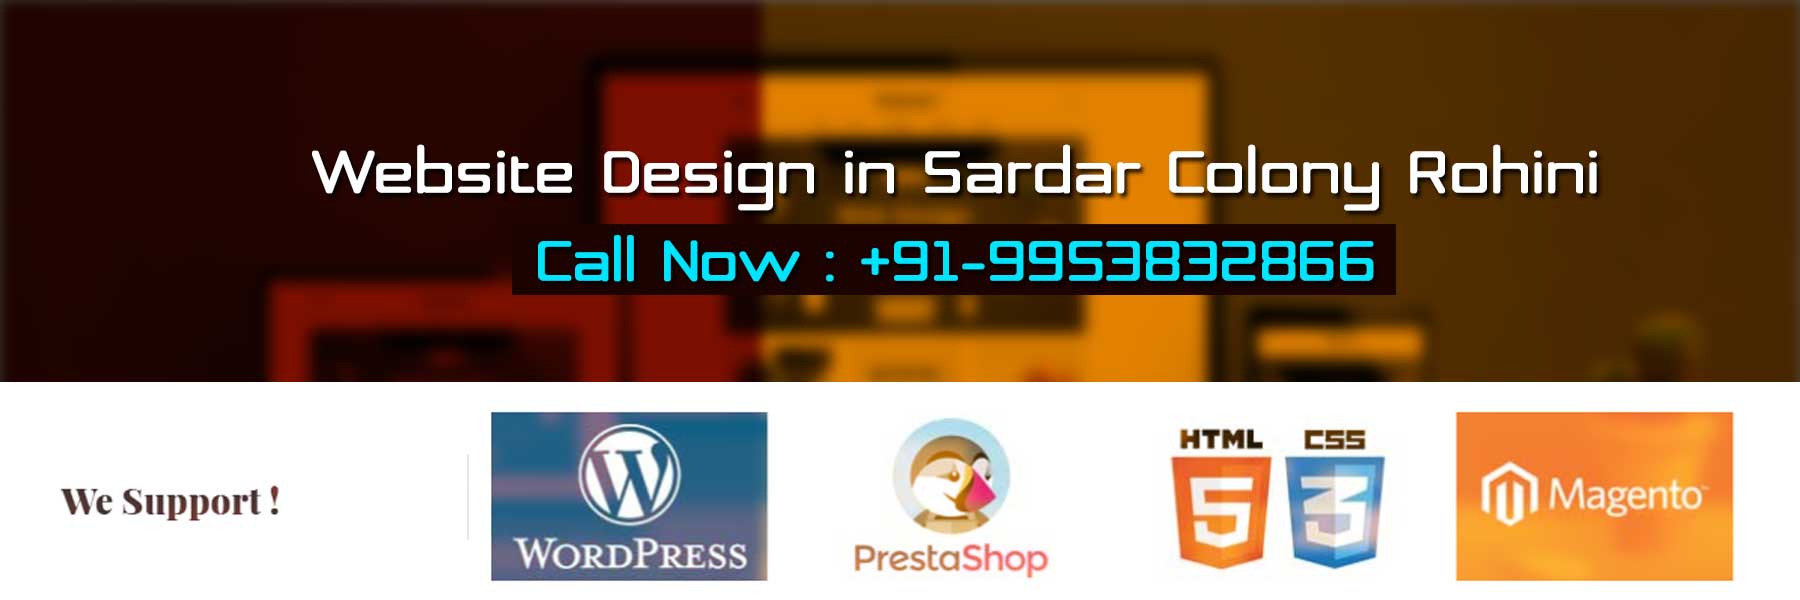 Website Design in Sardar Colony Rohini